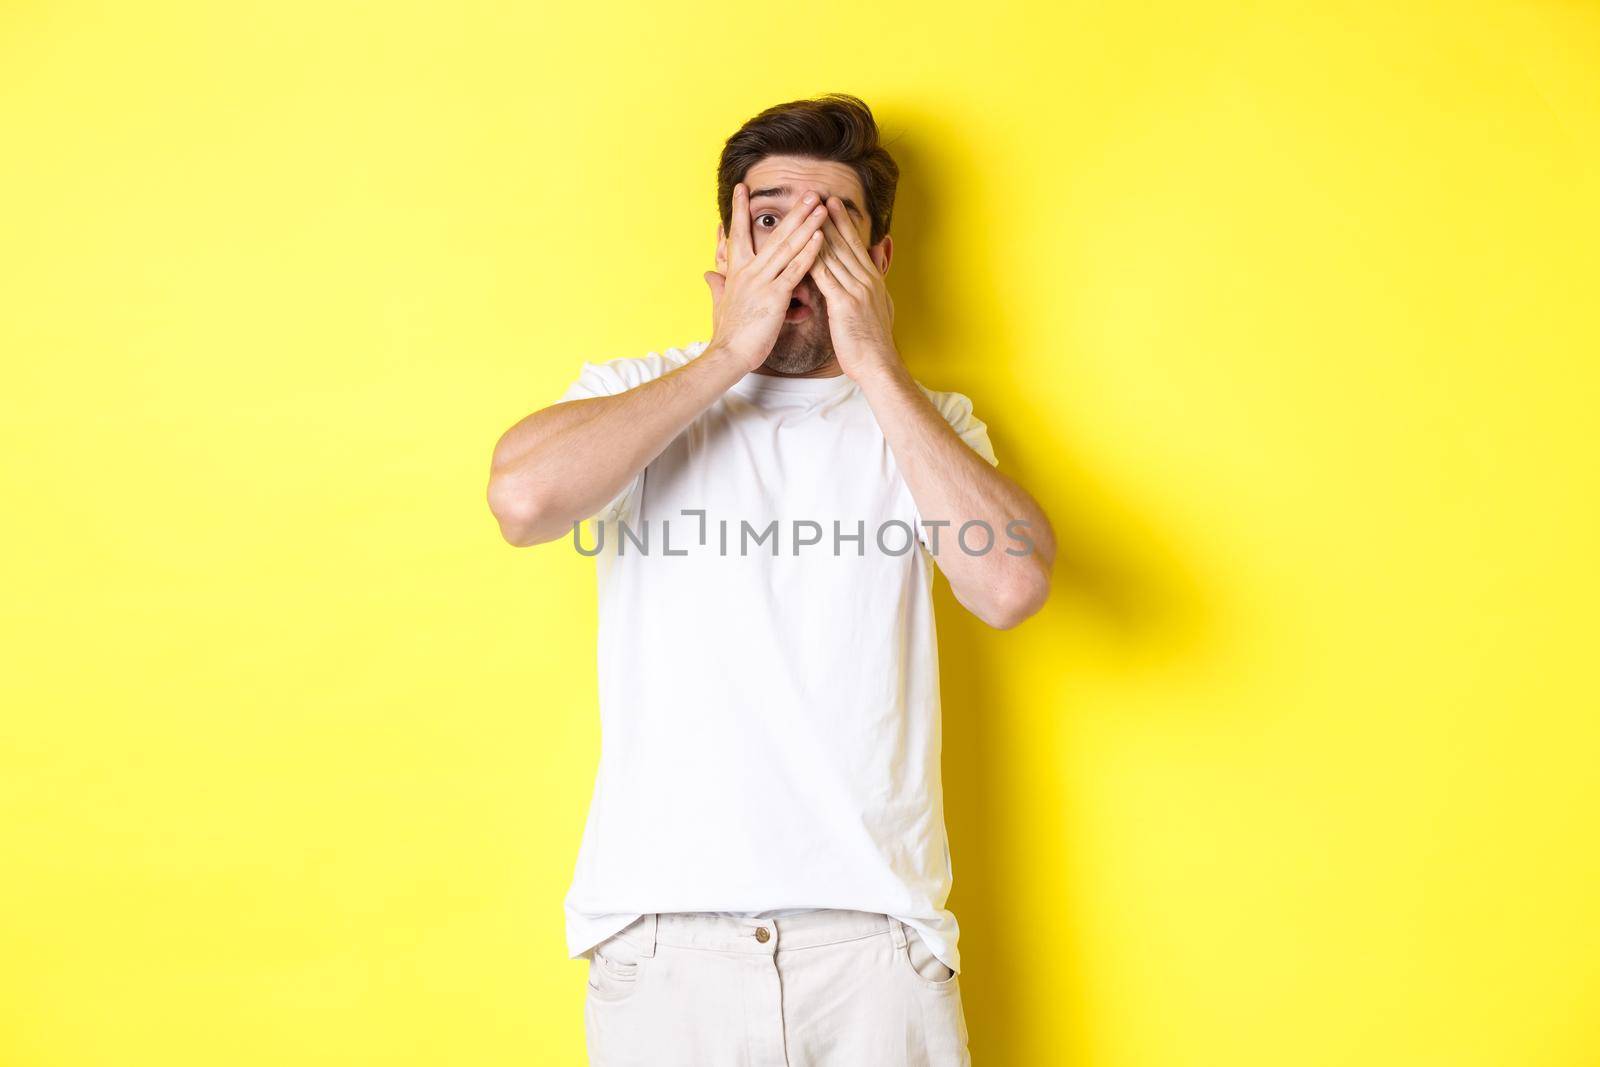 Embarrassed guy shut eyes but peeking through fingers at something awkward, standing over yellow background.